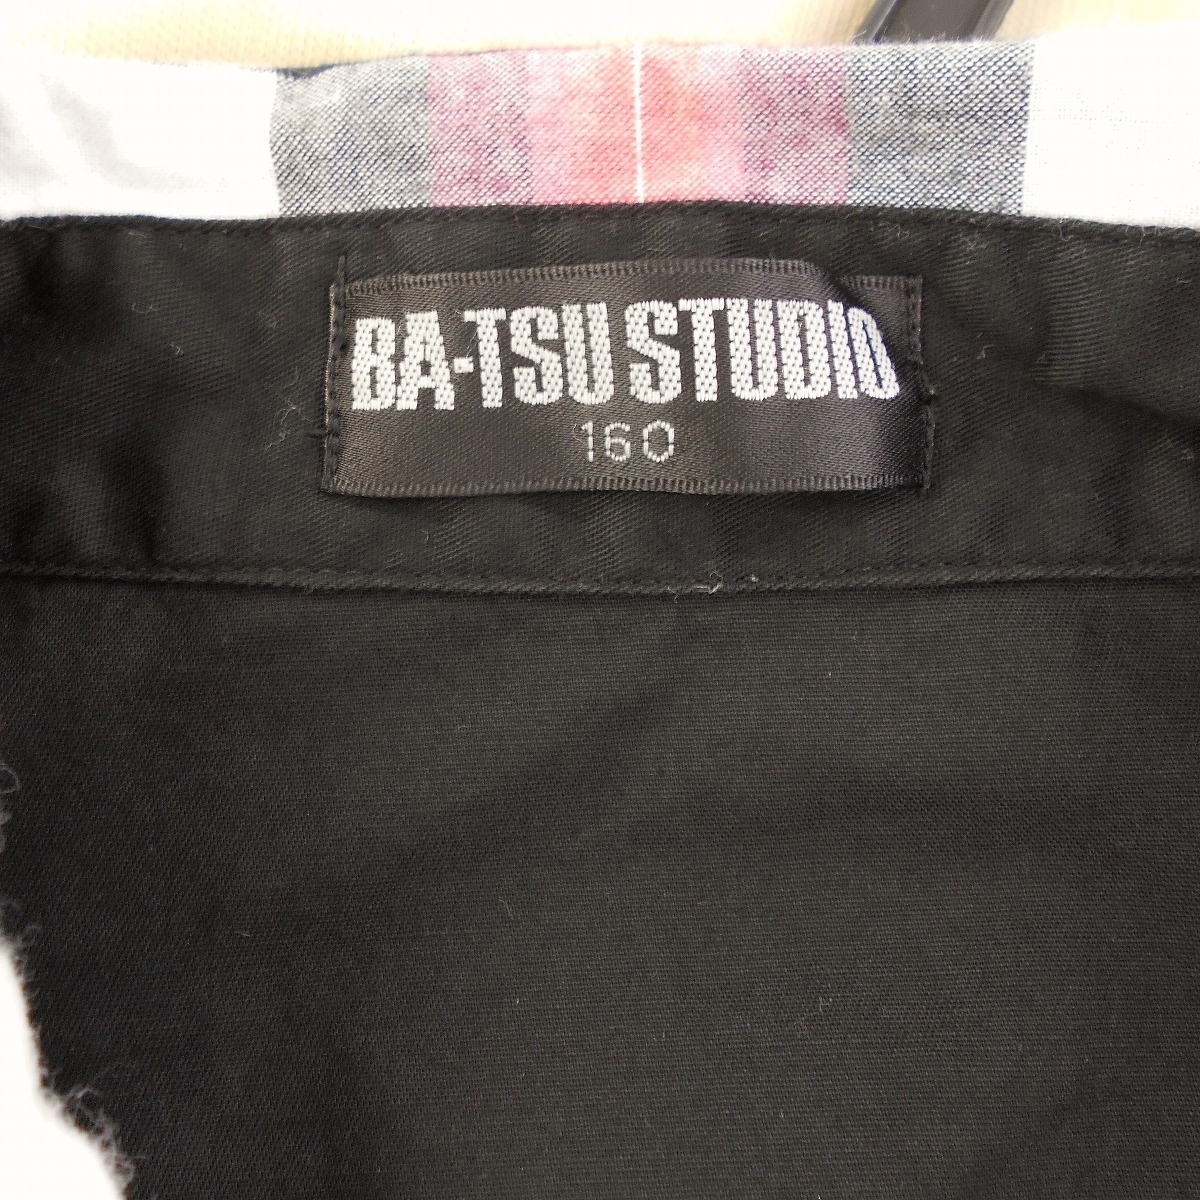  Ba-Tsu Studio BA-TSU STUDIO Kids Junior man 160cm long sleeve shirt red black white check Skull . sleeve roll up tops 